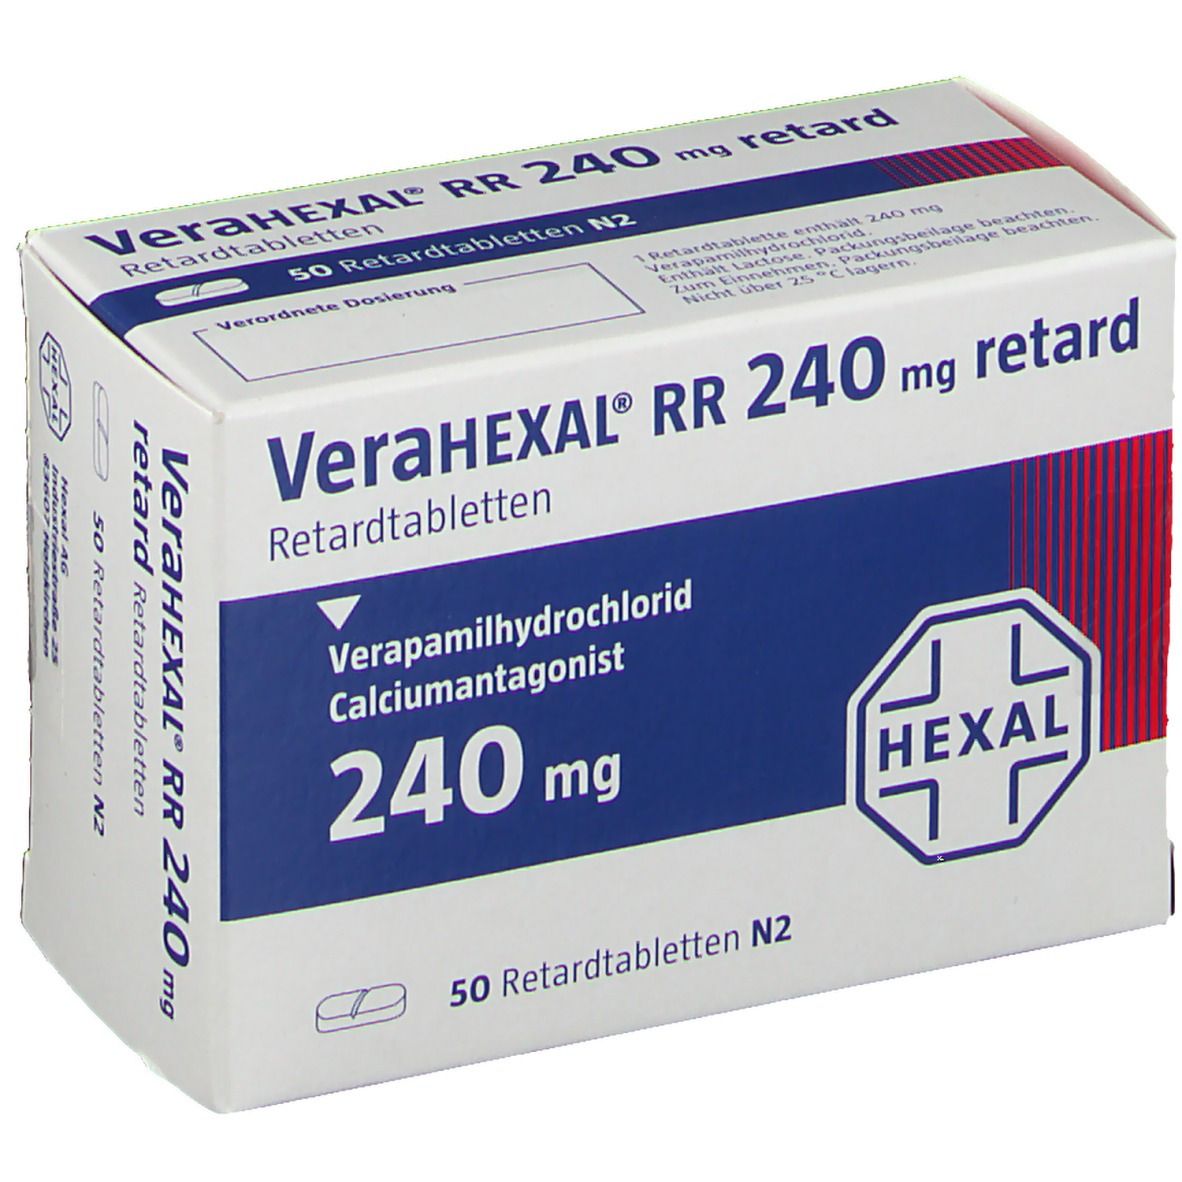 VeraHEXAL® RR 240 mg retard